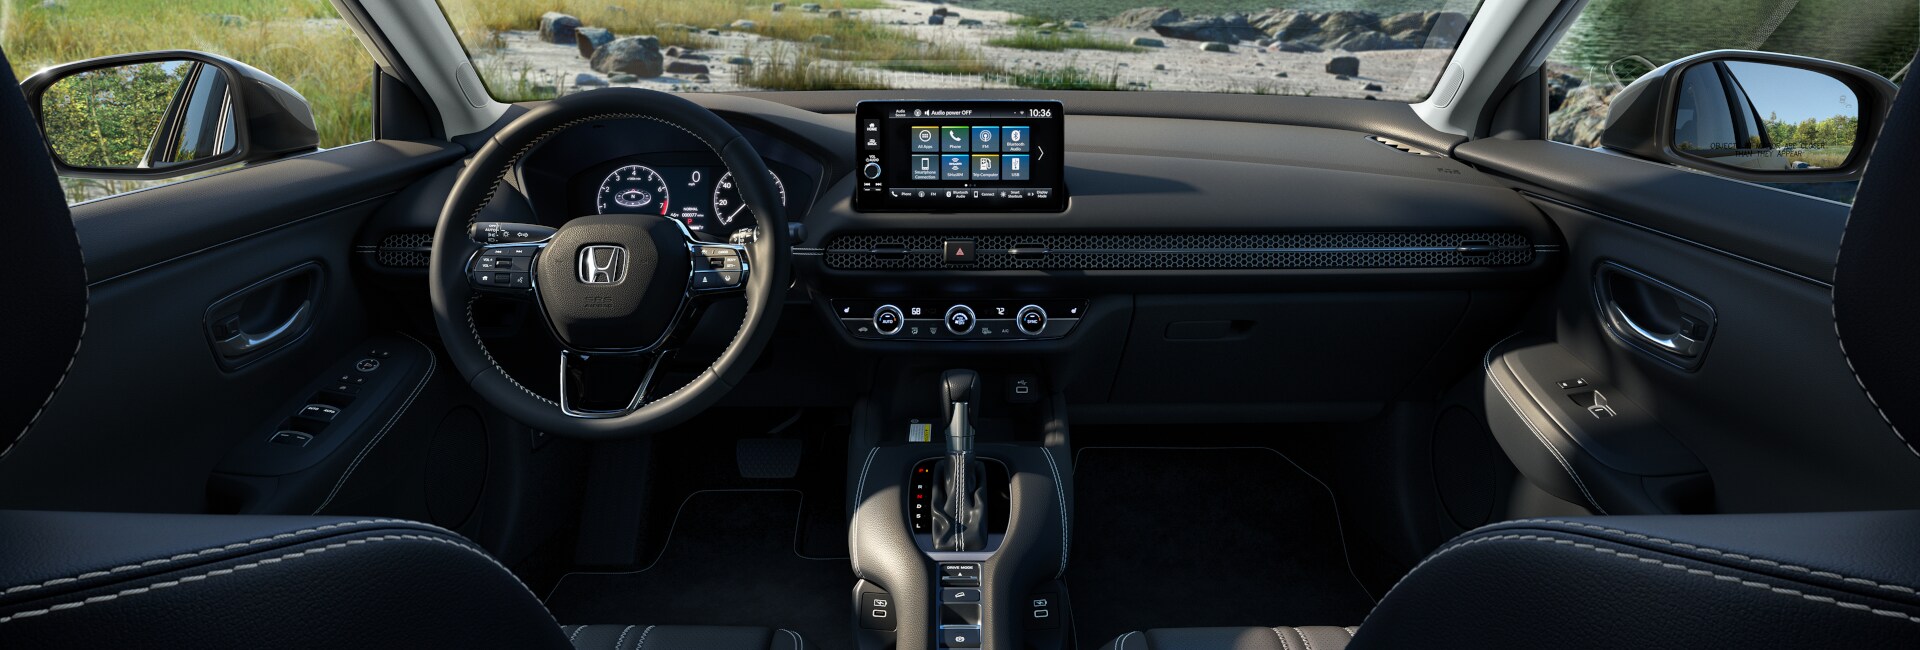 2020 Honda HR-V Interior Features